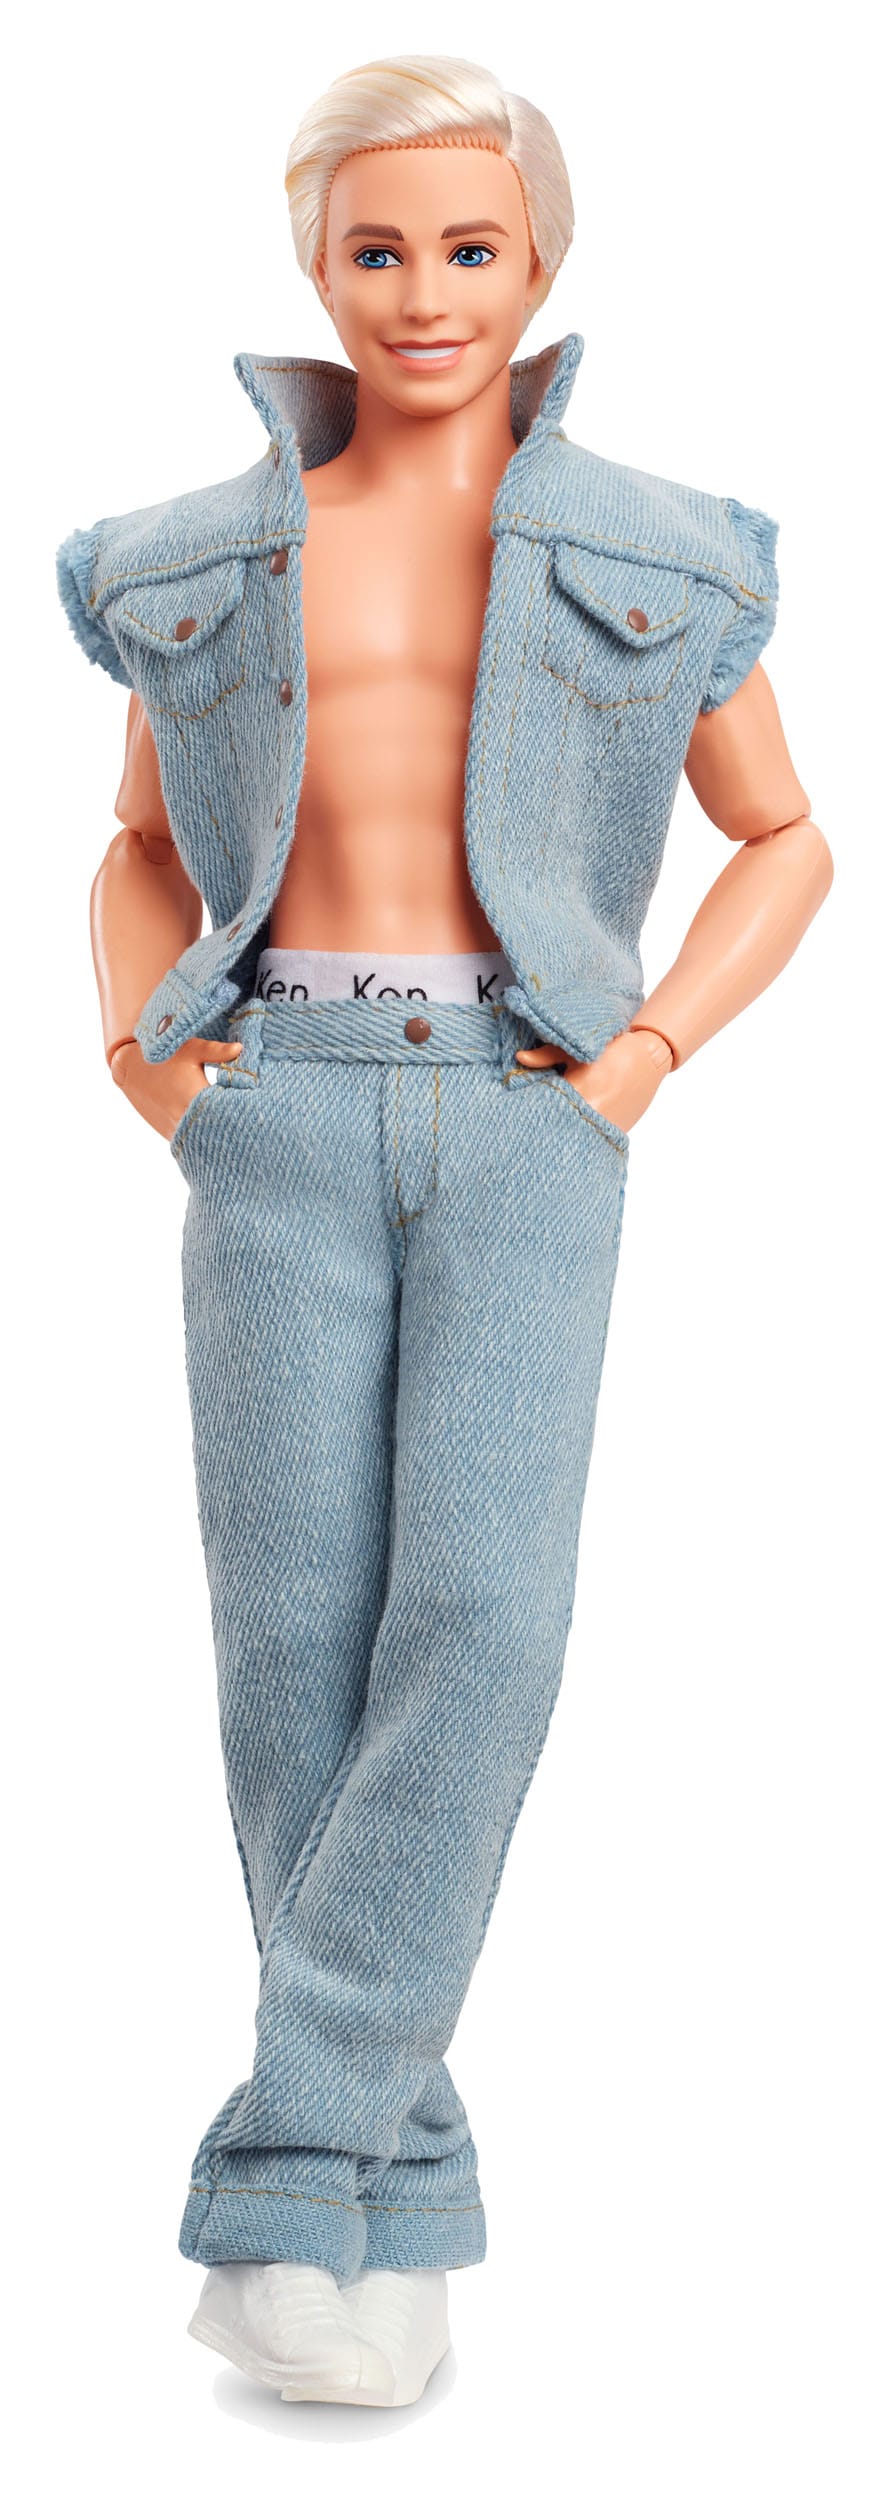 Barbie The Movie Ken Doll Wearing Denim Matching Set